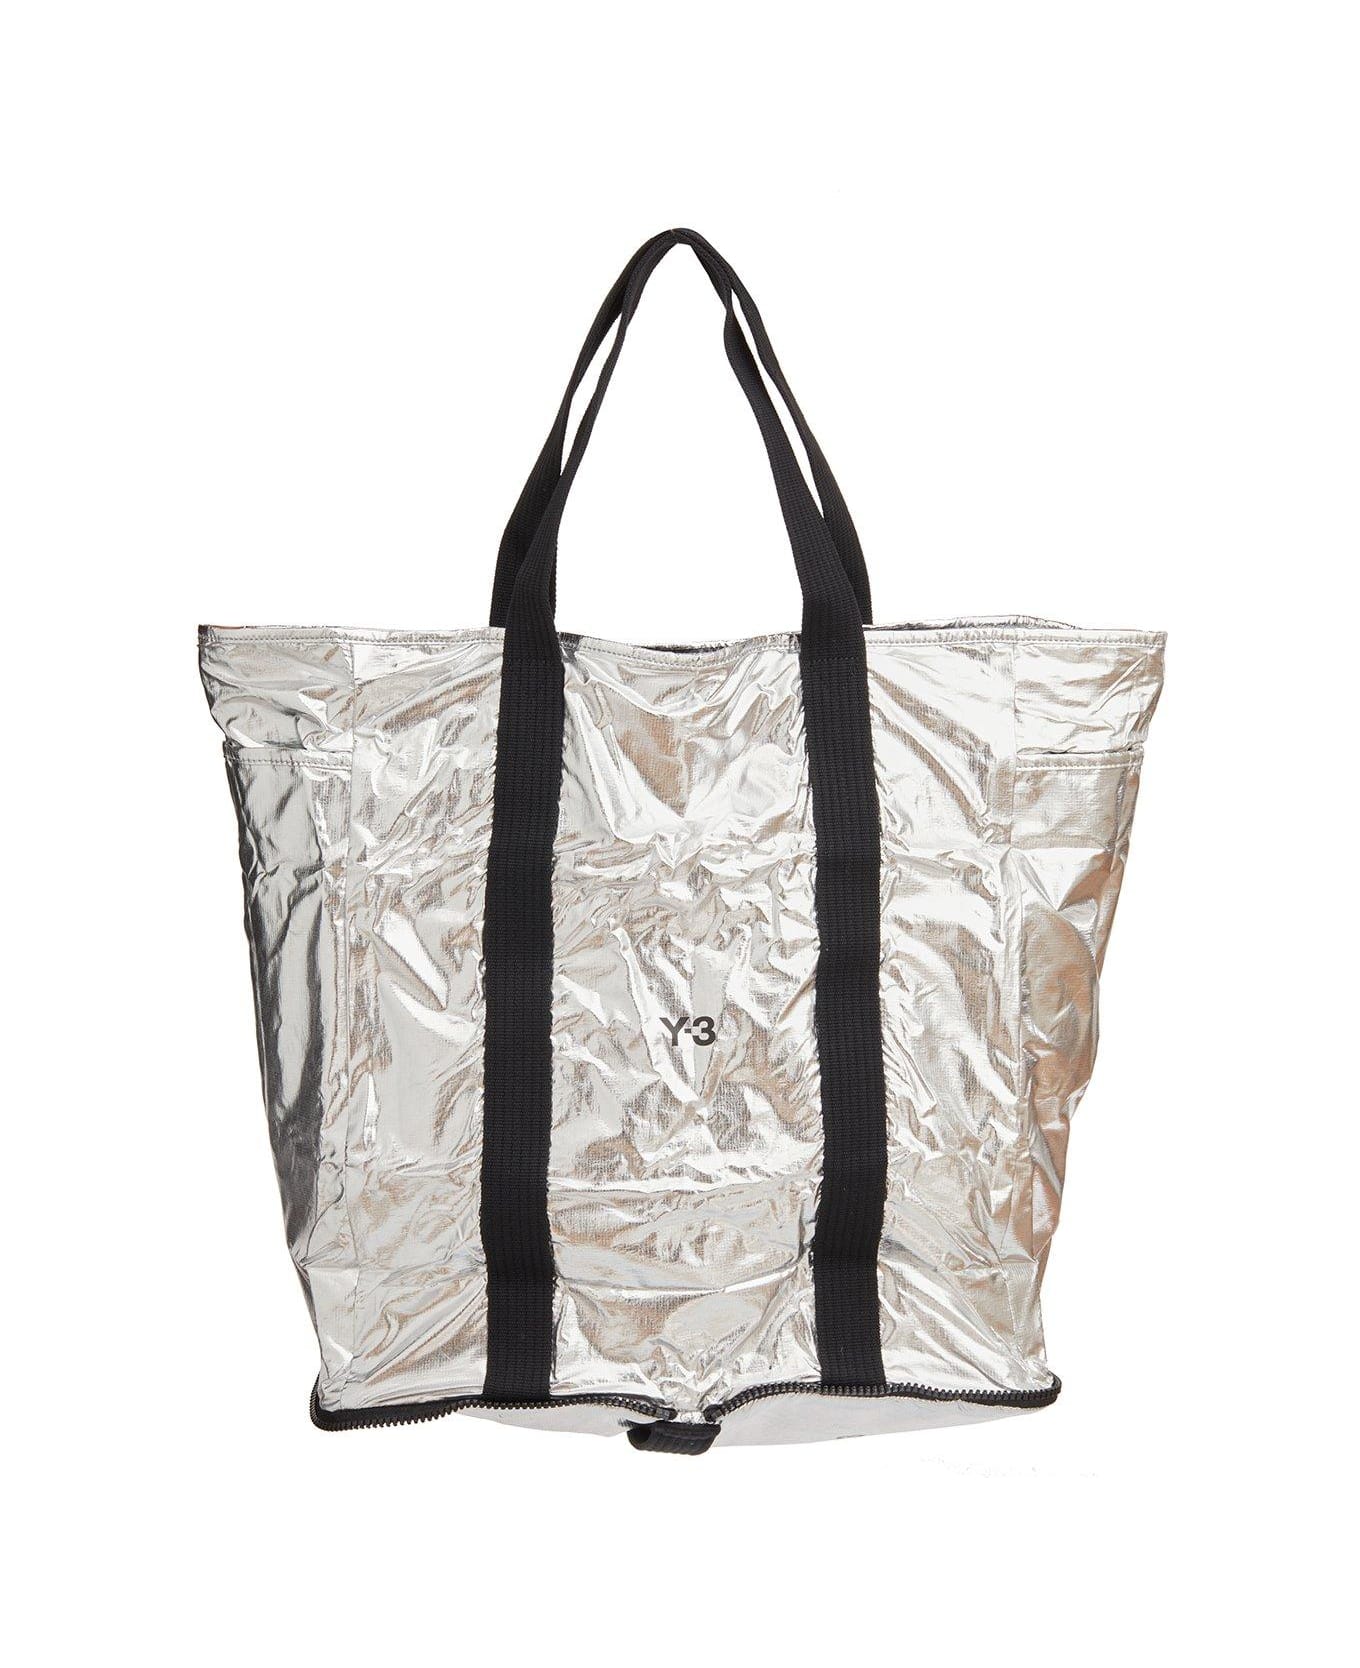 Y-3 Logo Printed Zip-around Packable Tote Bag トートバッグ